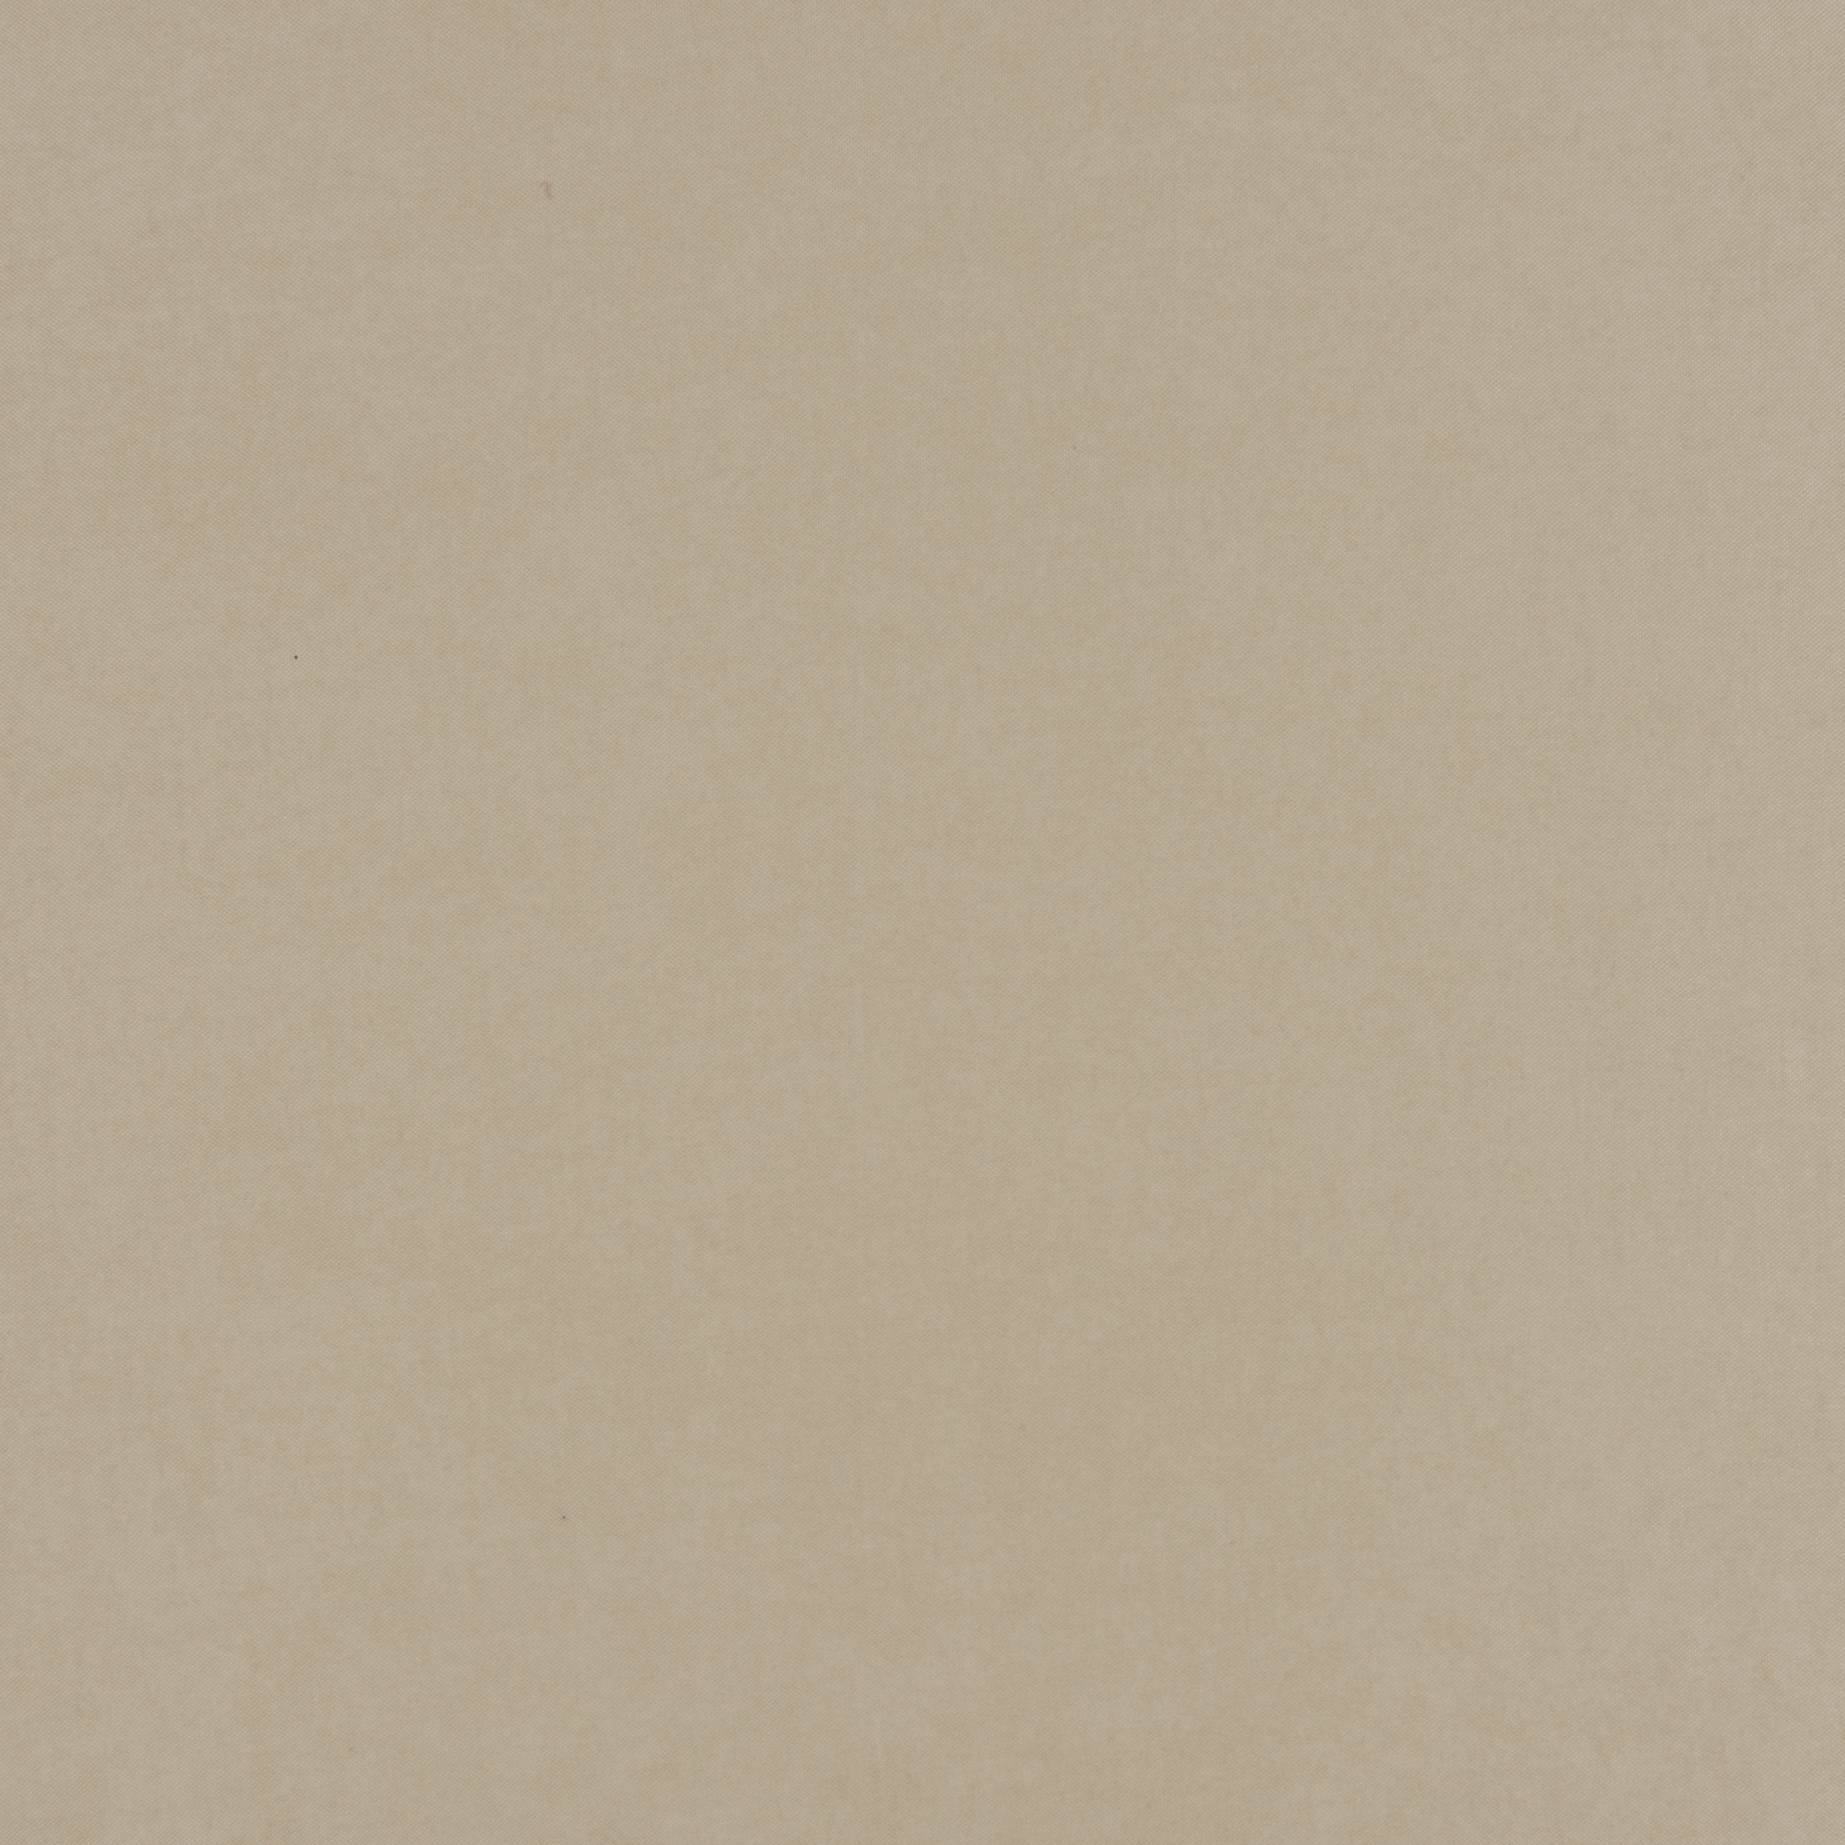 Декоративный нубук Арвин 2, канвас, полиэстер 100%, светлый беж, 205 г/м2, 50x30 см